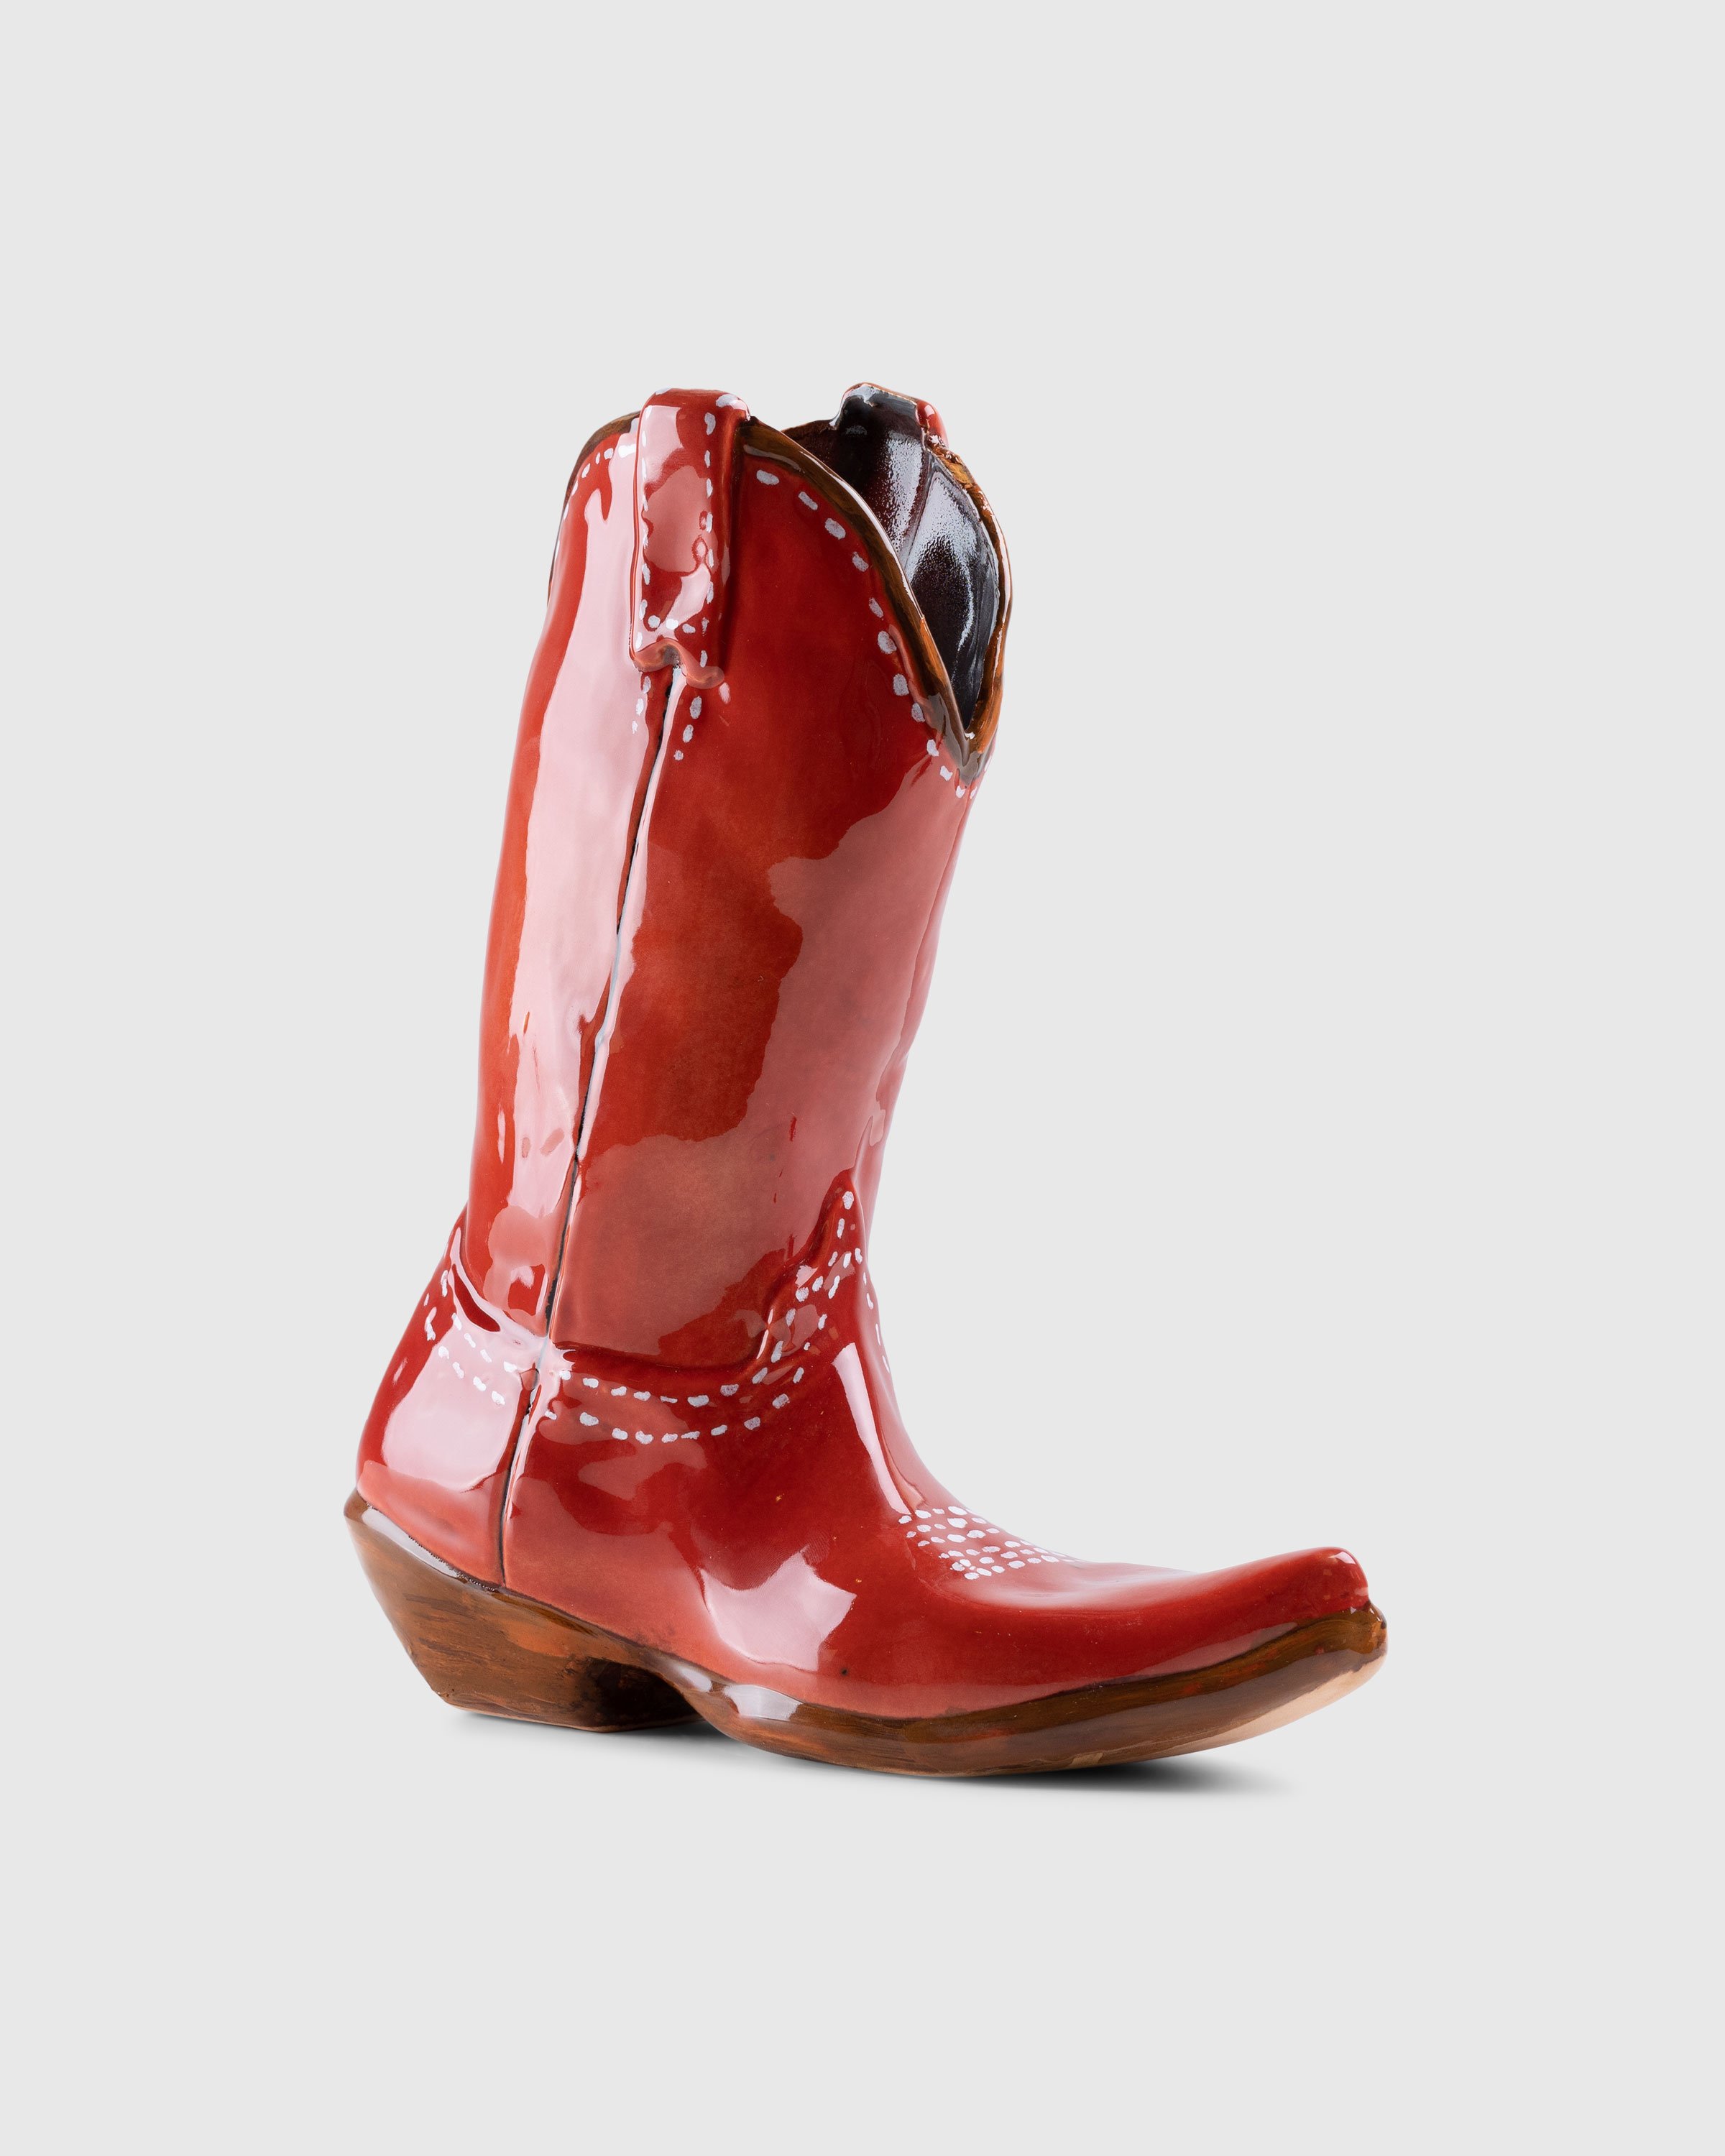 Zordan Generazione - Texan Vase Red - Lifestyle - Red - Image 2